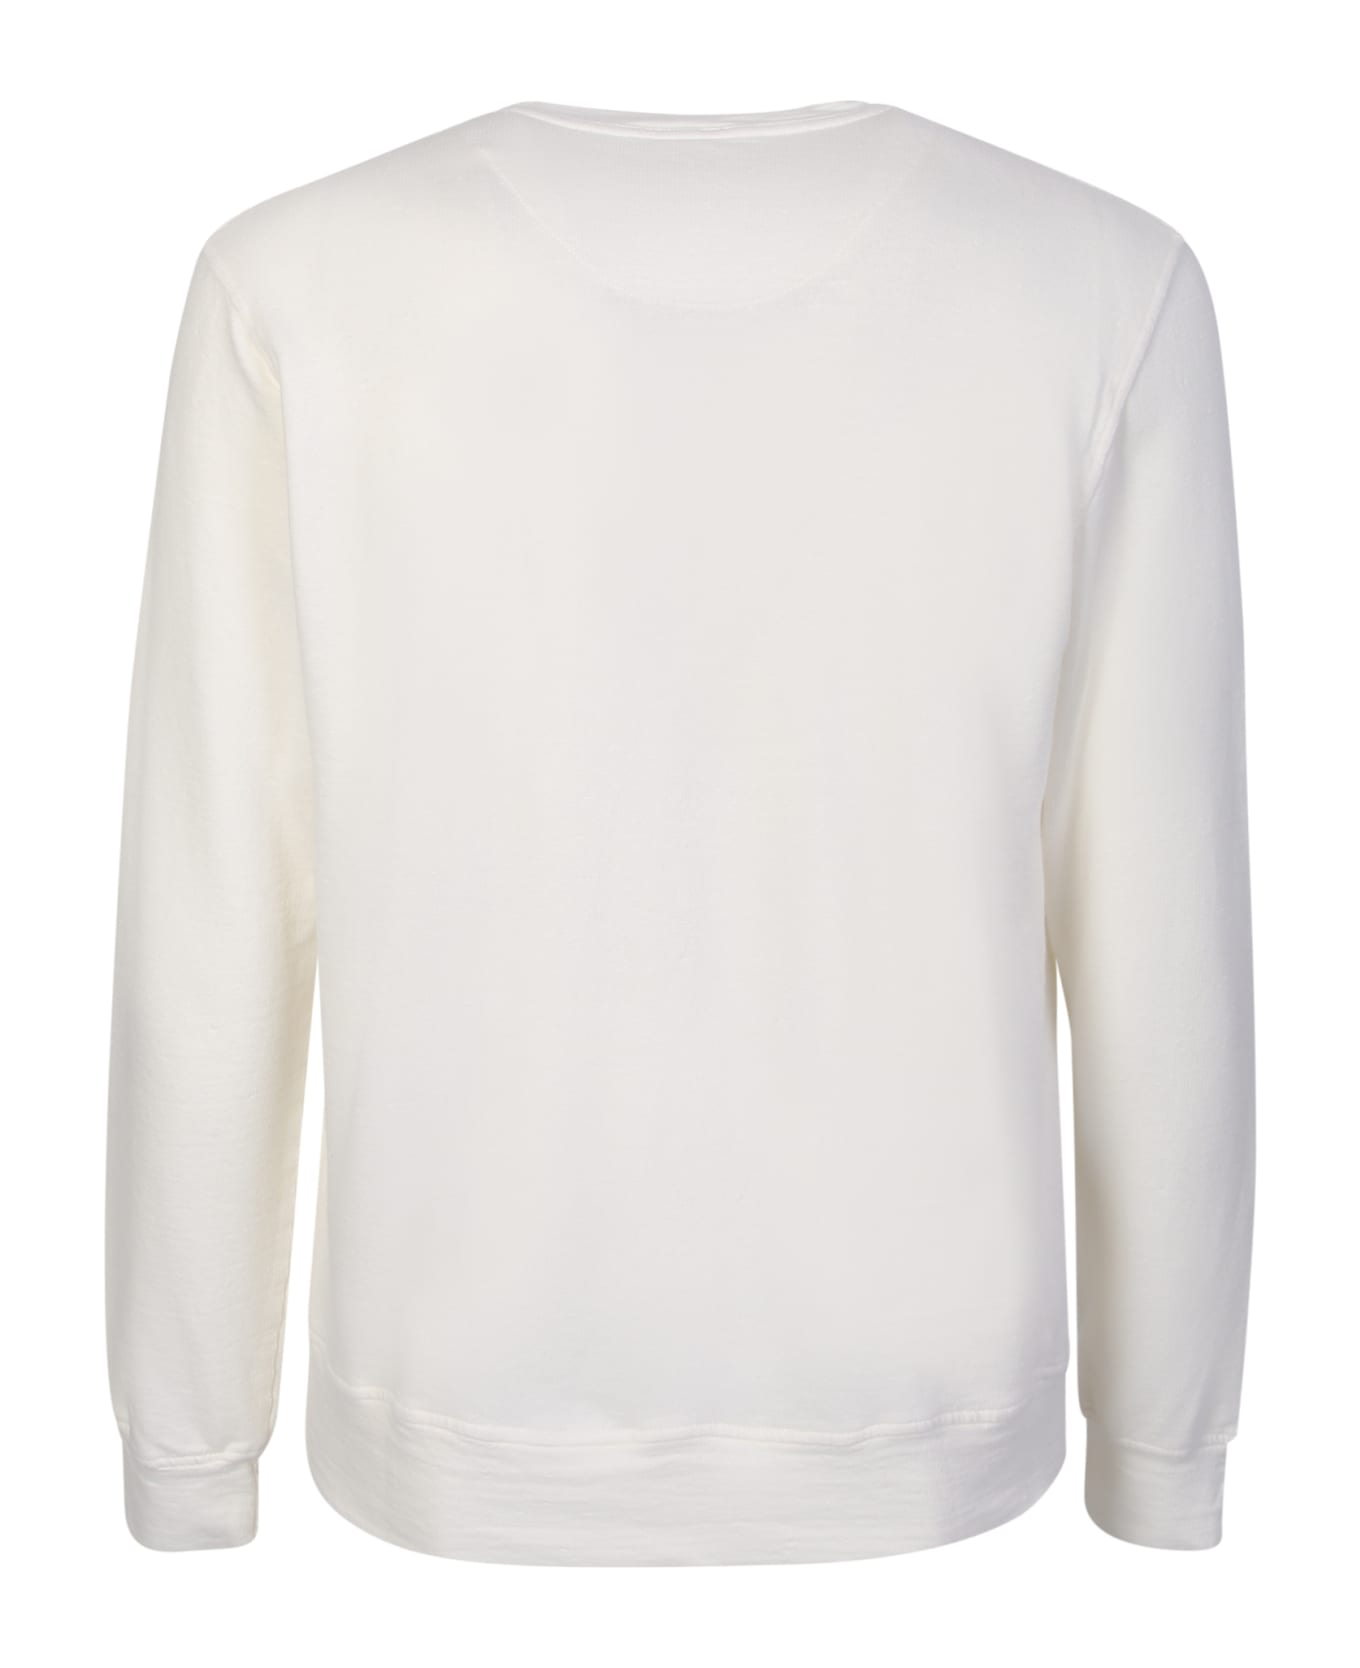 Original Vintage Style White Linen Sweatshirt - White フリース